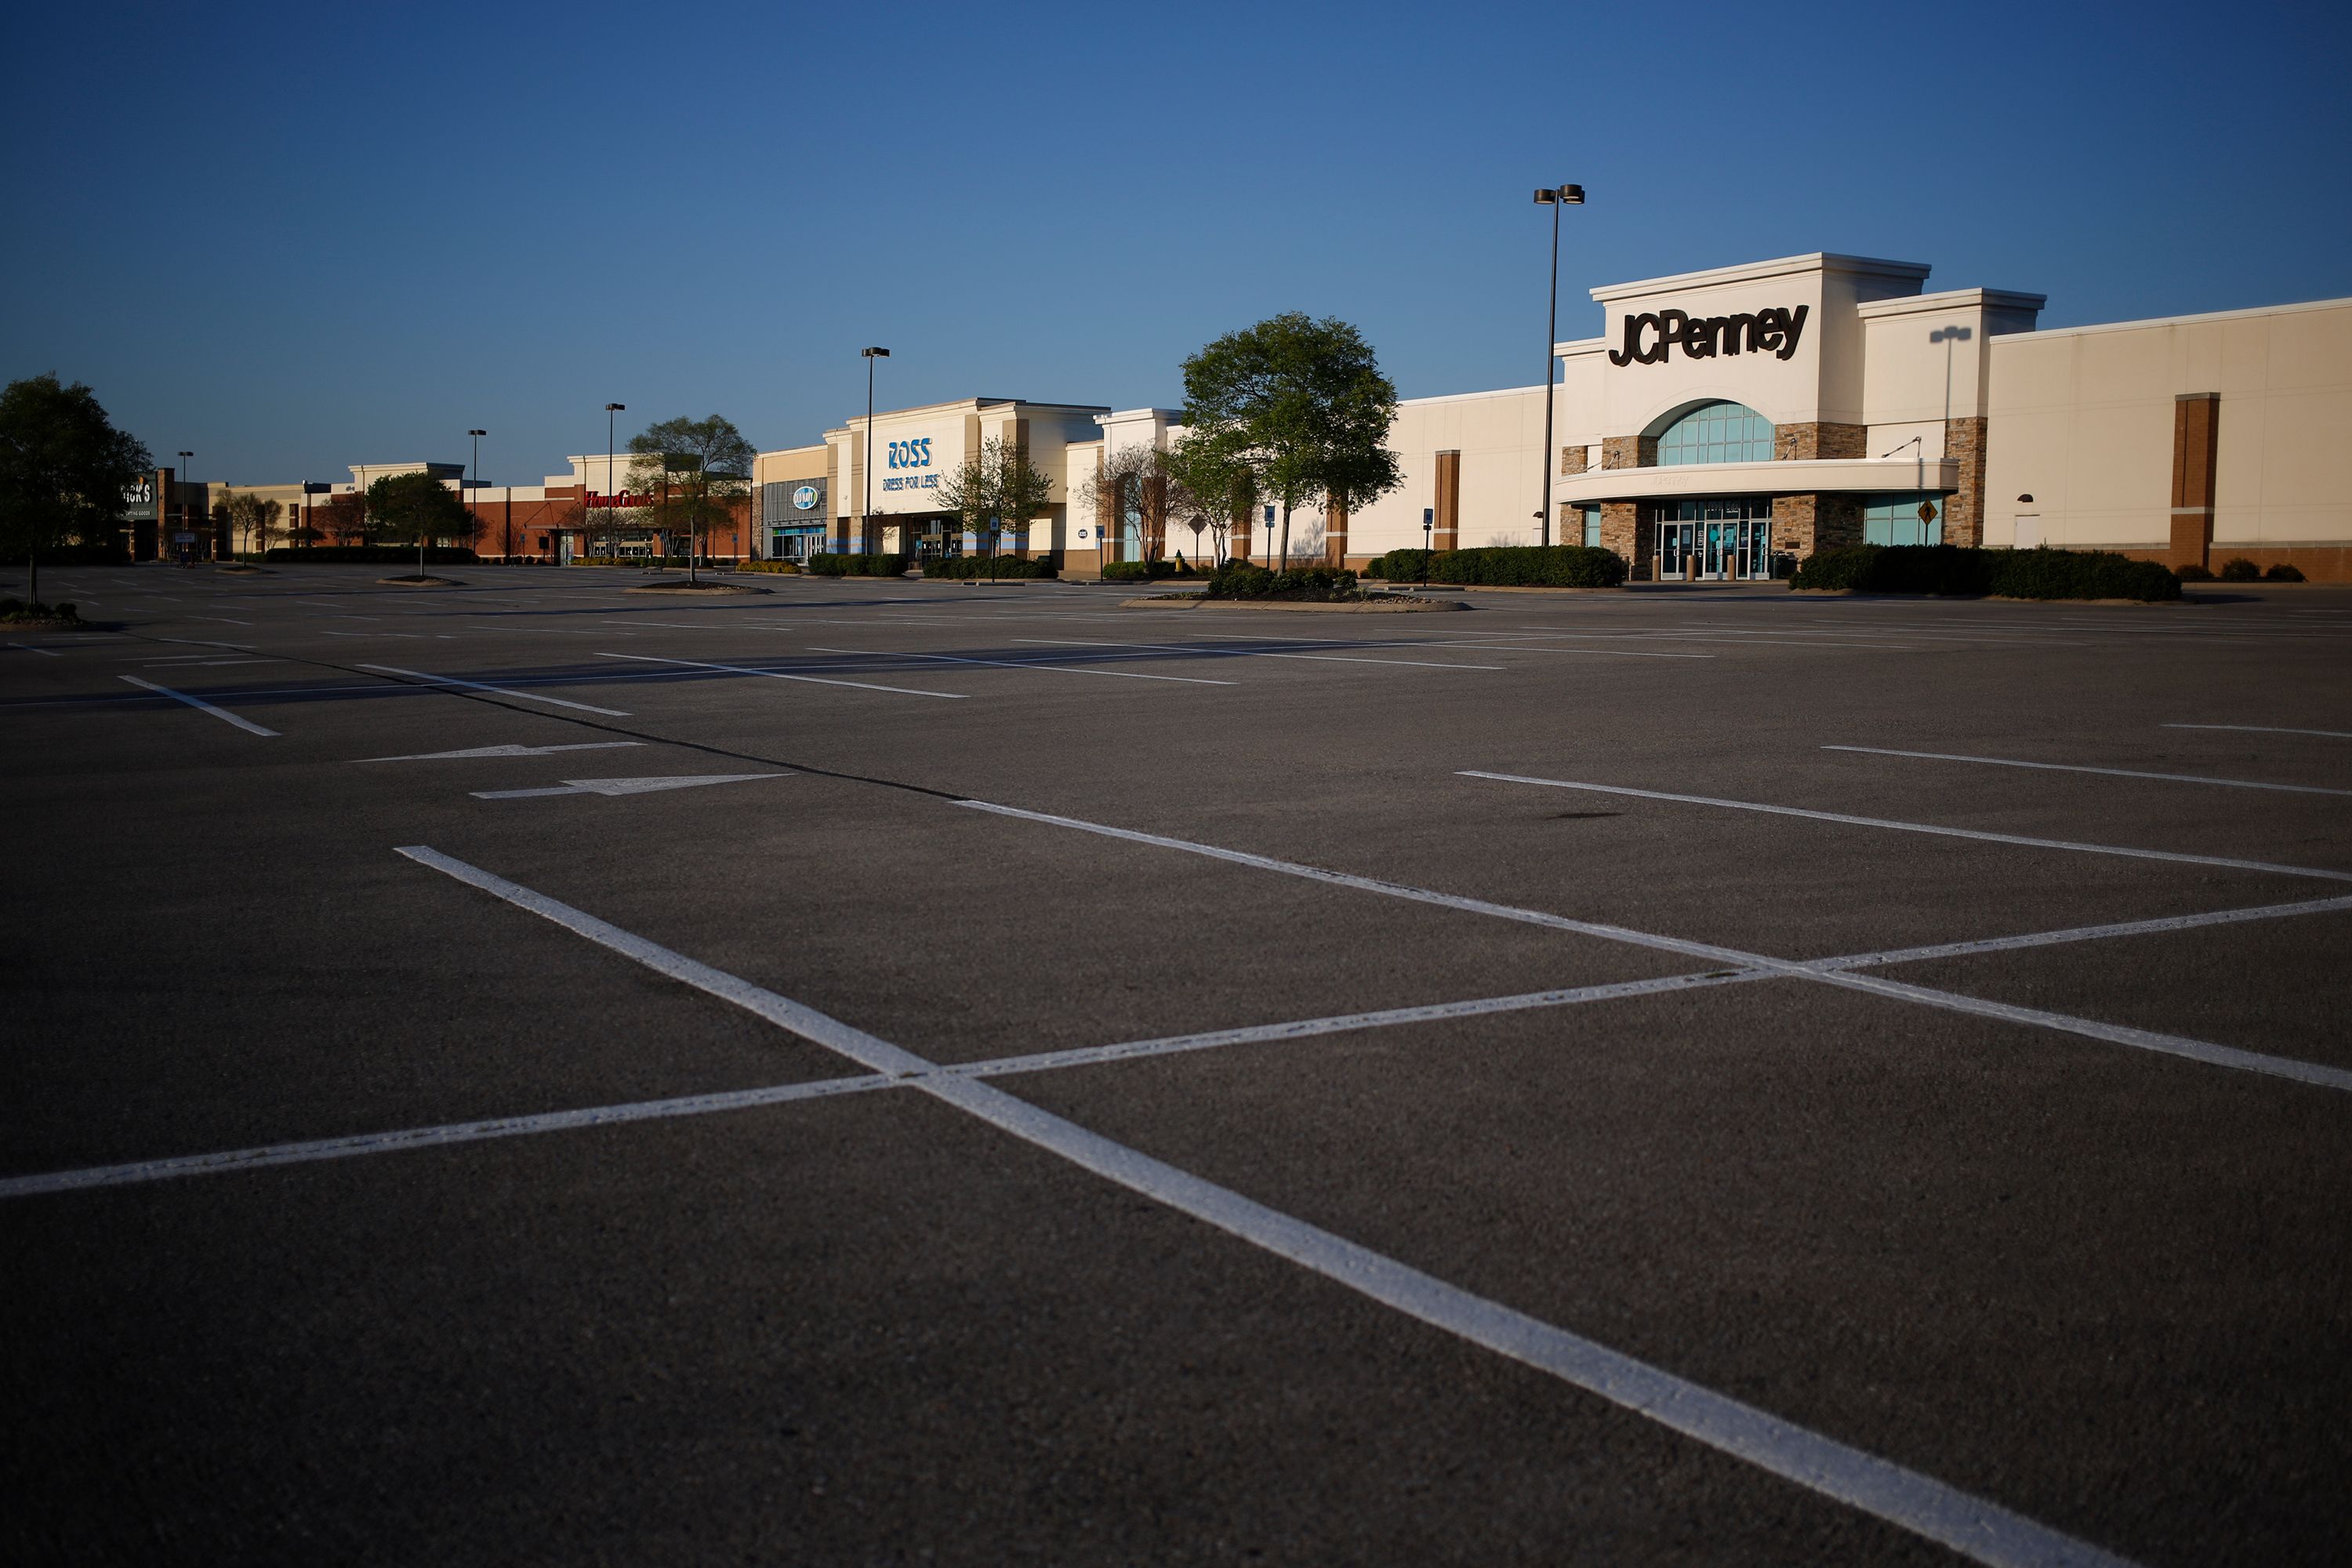 J.C. Penney store closings 2020: Bankruptcy raises liquidation risk